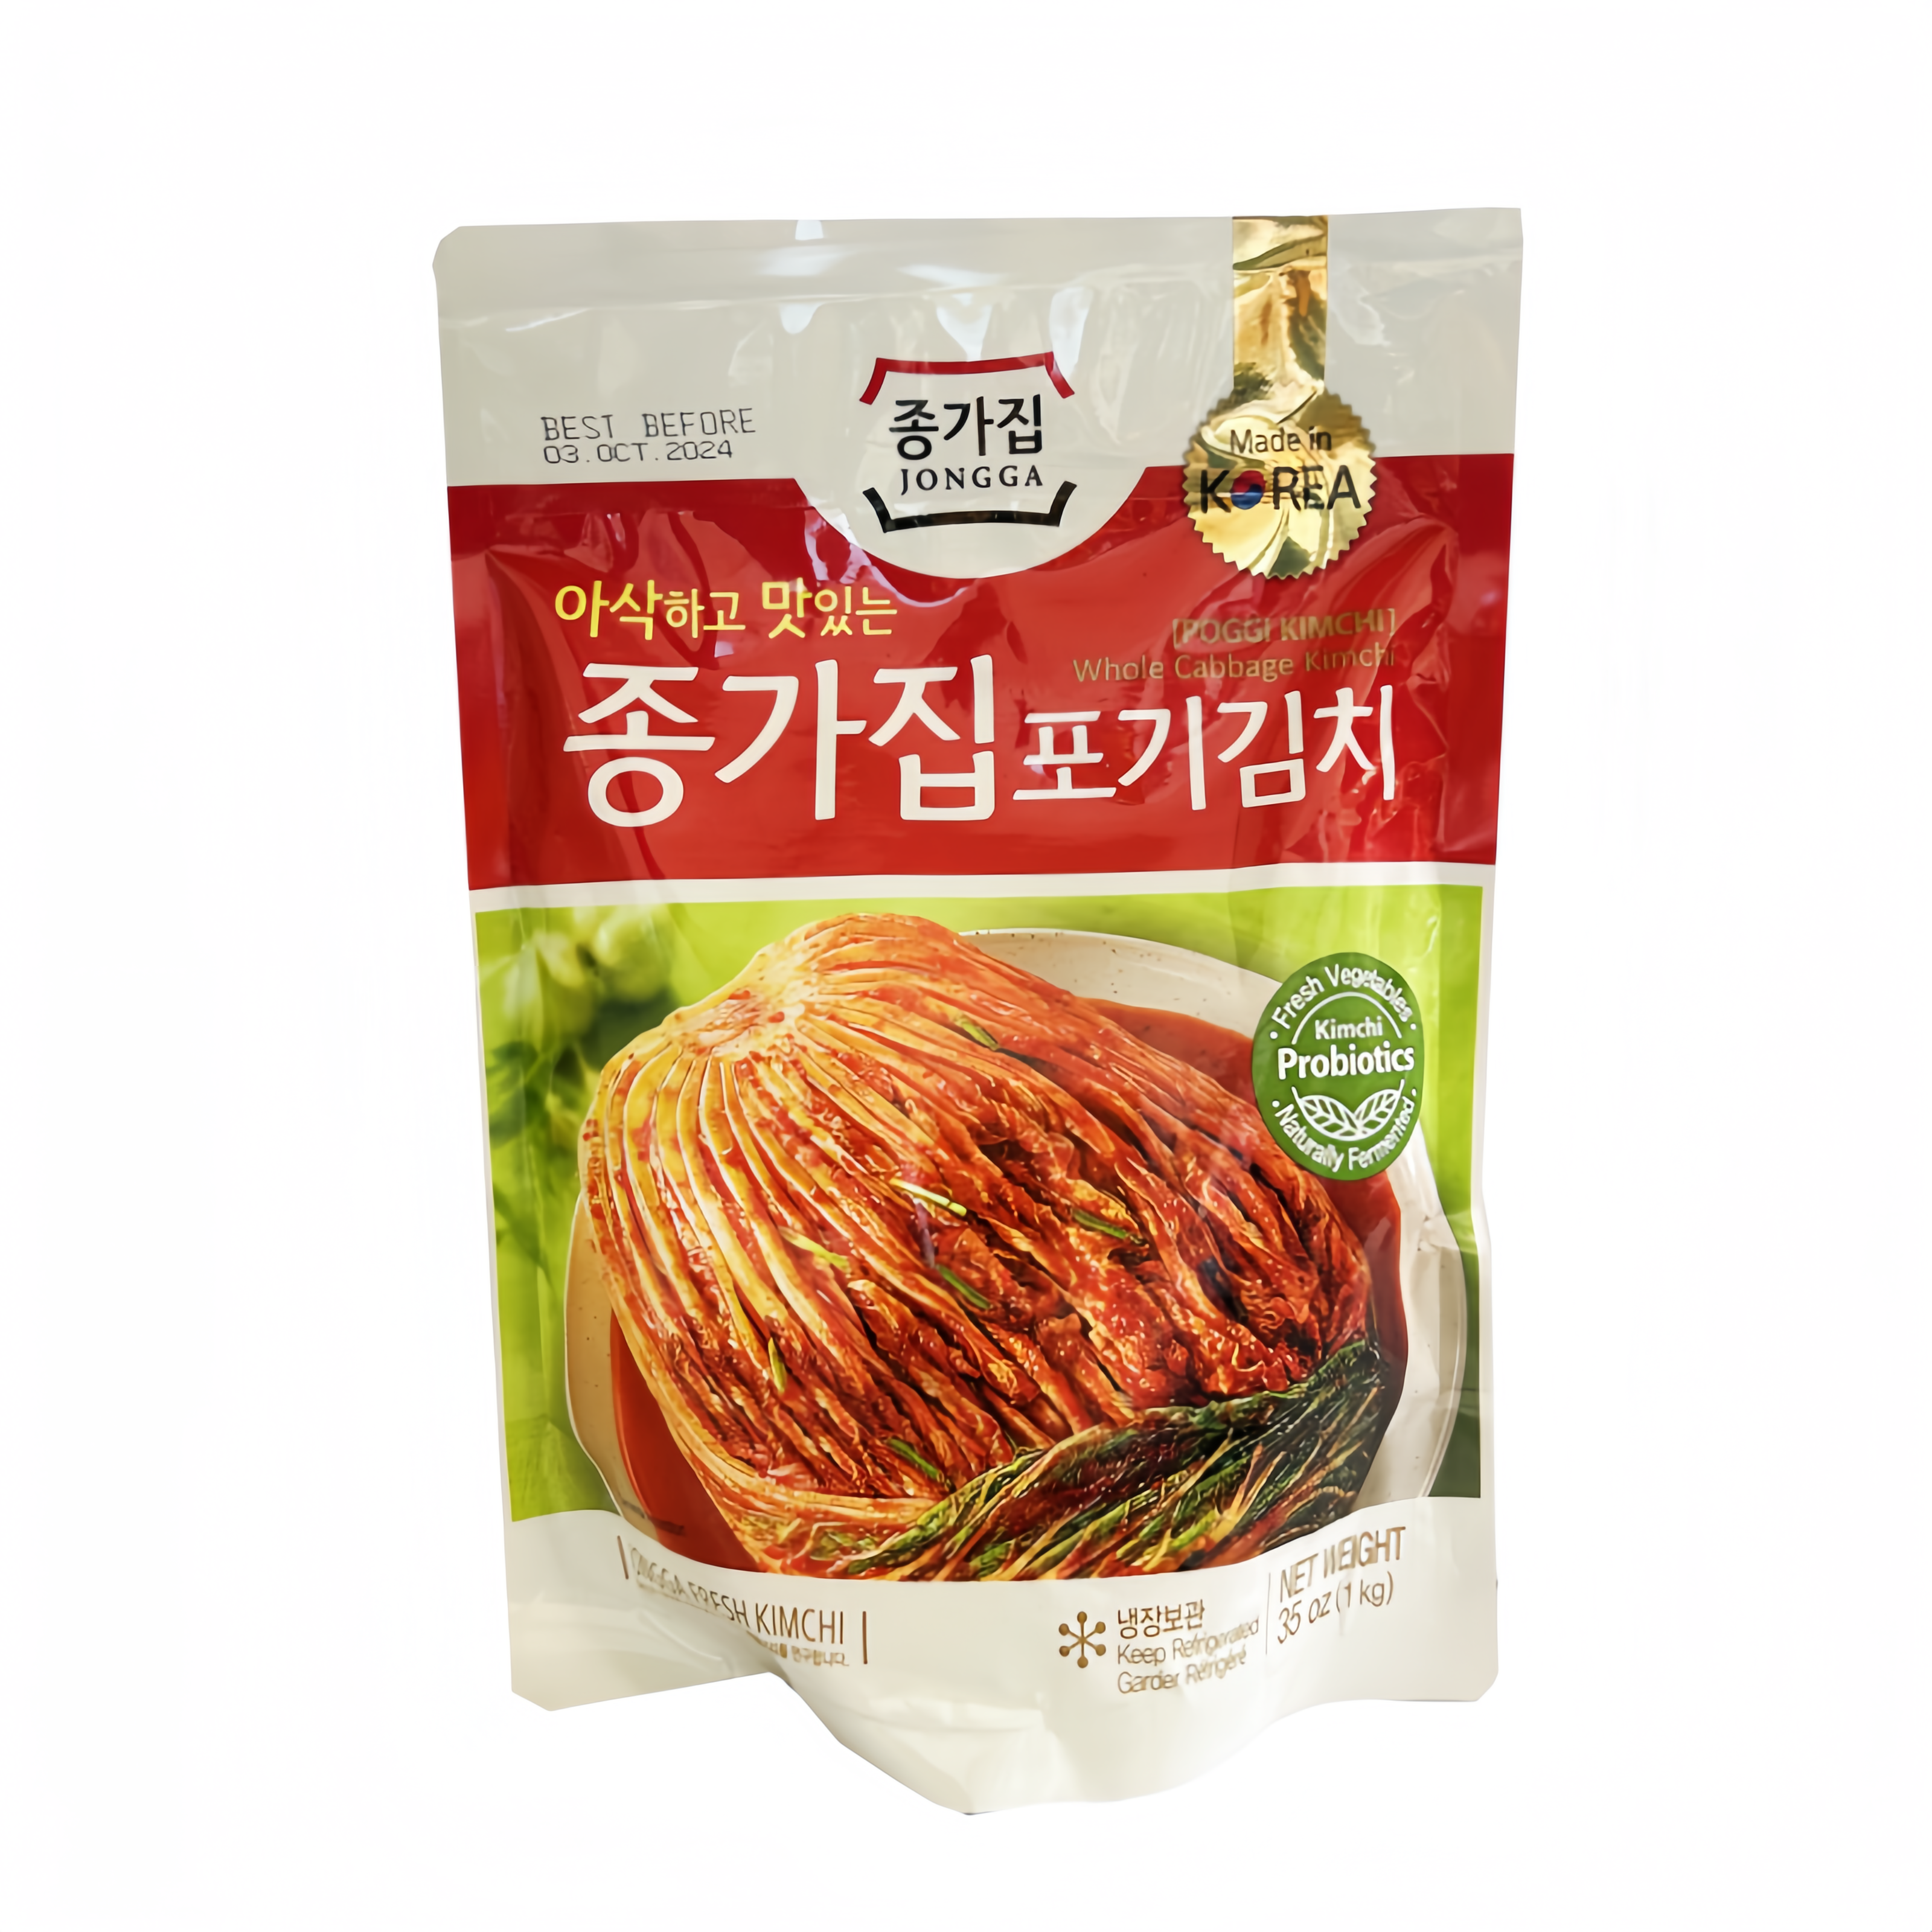 Whole Cabbage Kimchi 1kg Jongga Korea